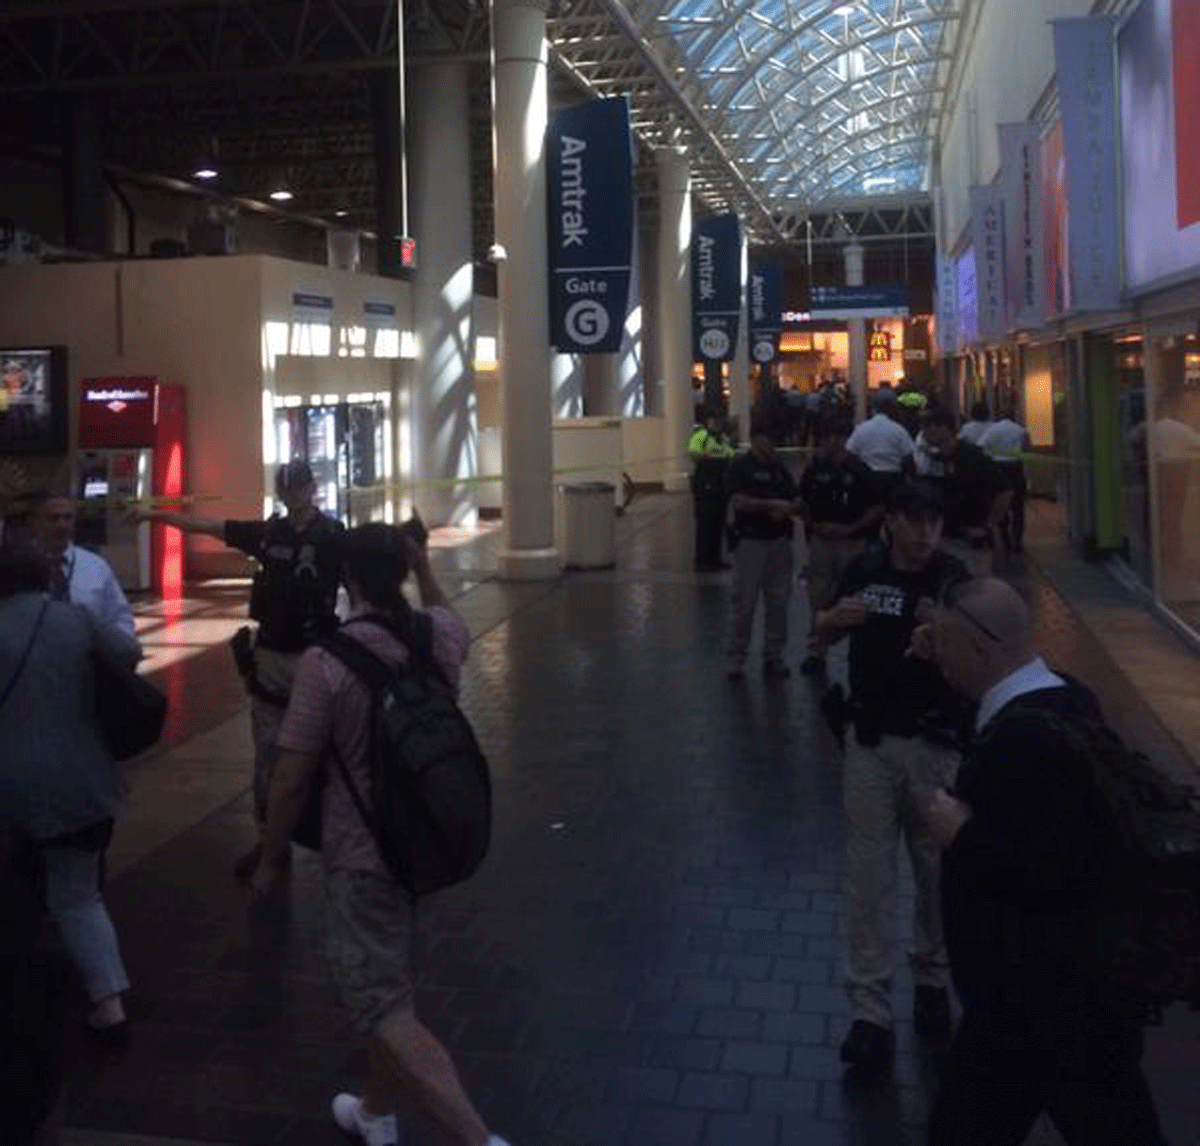 Police activity at Union Station Sept. 11, 2015. (Courtesy Steve Dorsey)